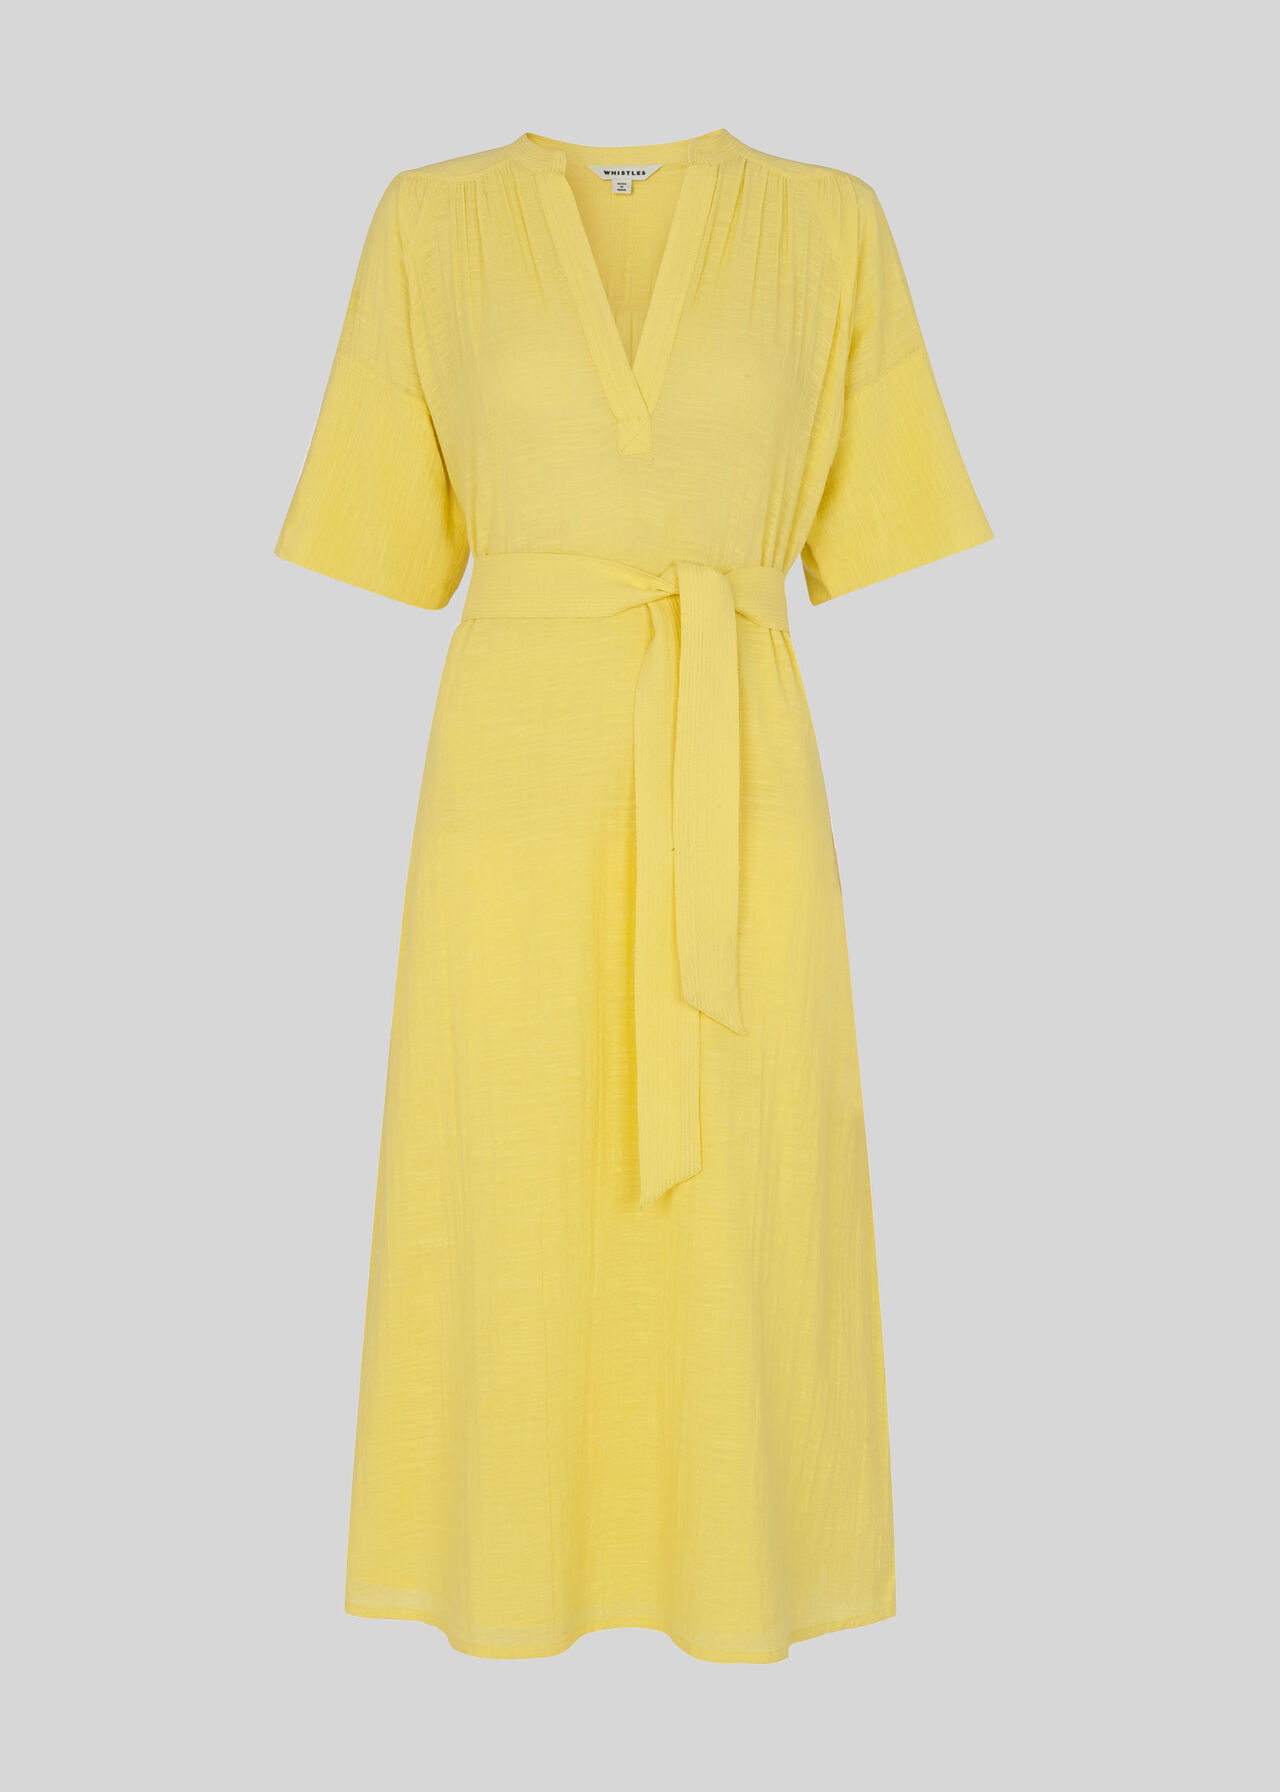 Alicia Tie Textured Dress Lemon